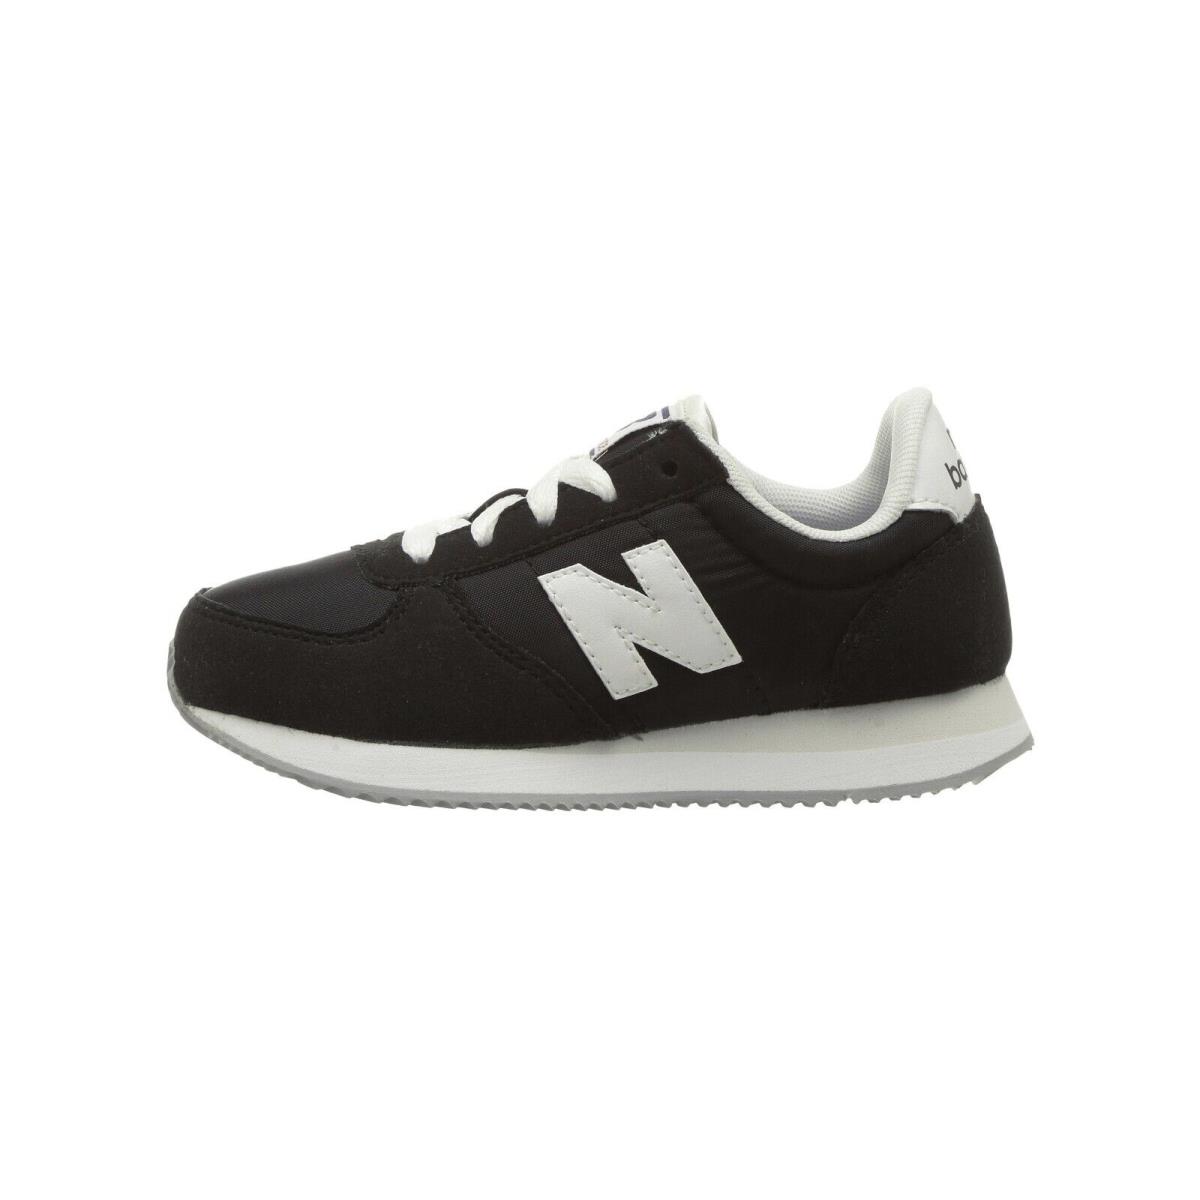 New Balance Big Kids Running Shoes Sneakers KL220BWY - Black/white